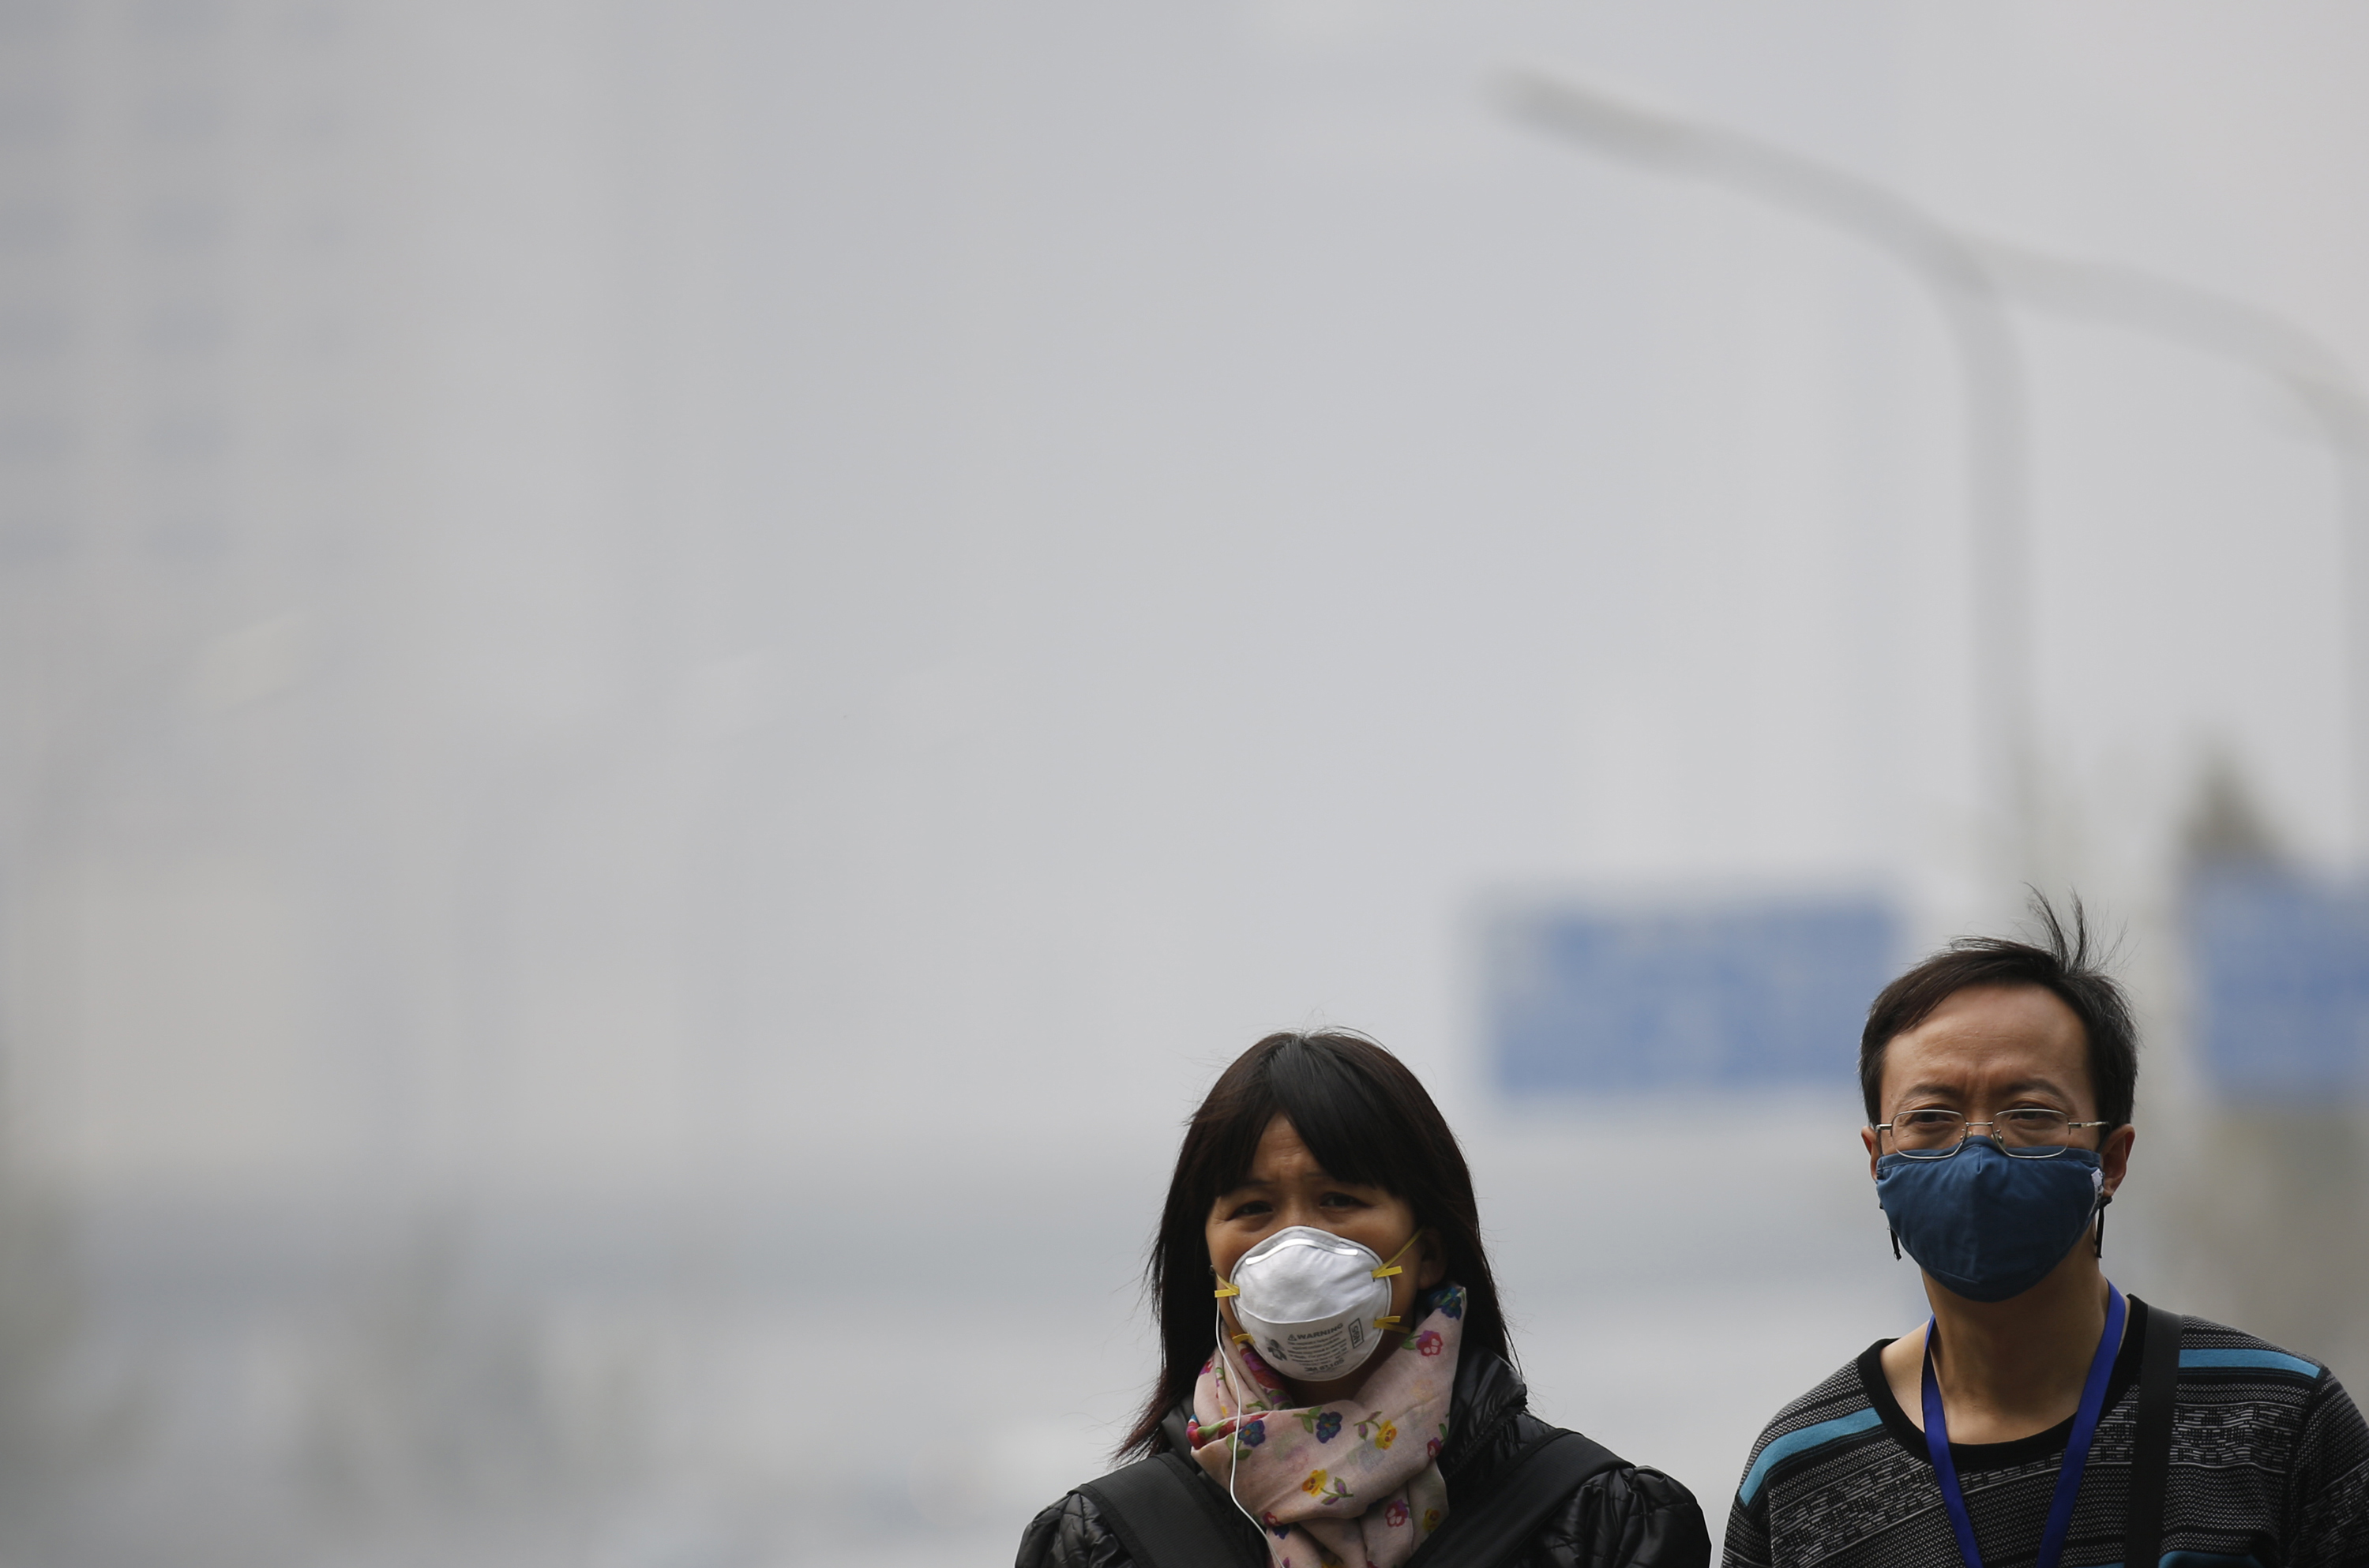 People wearing masks walk on a street amid heavy haze and smog in Beijing